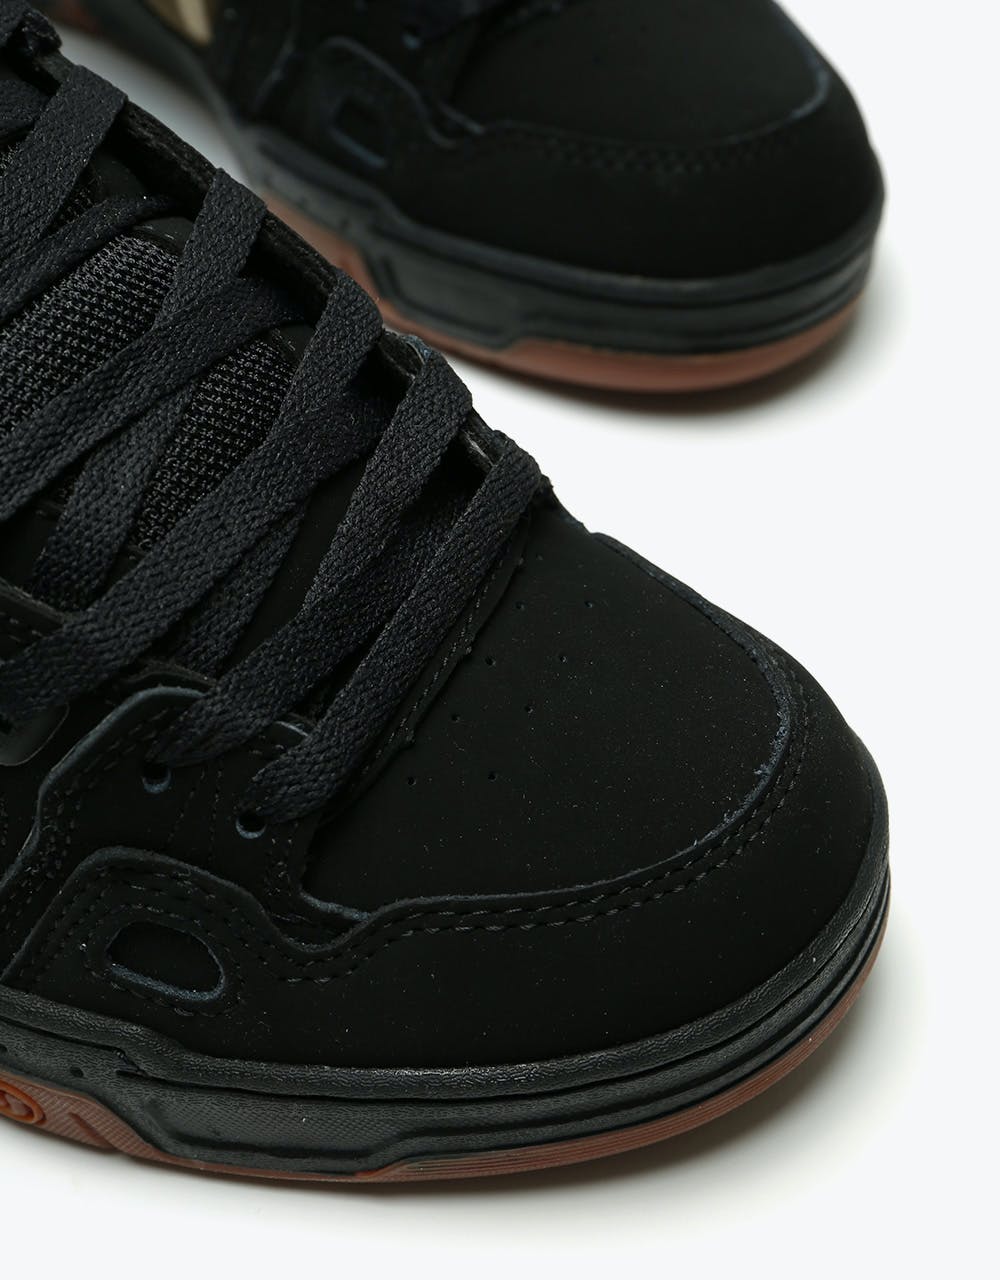 DVS Comanche Skate Shoes - Black/Camo Nubuck